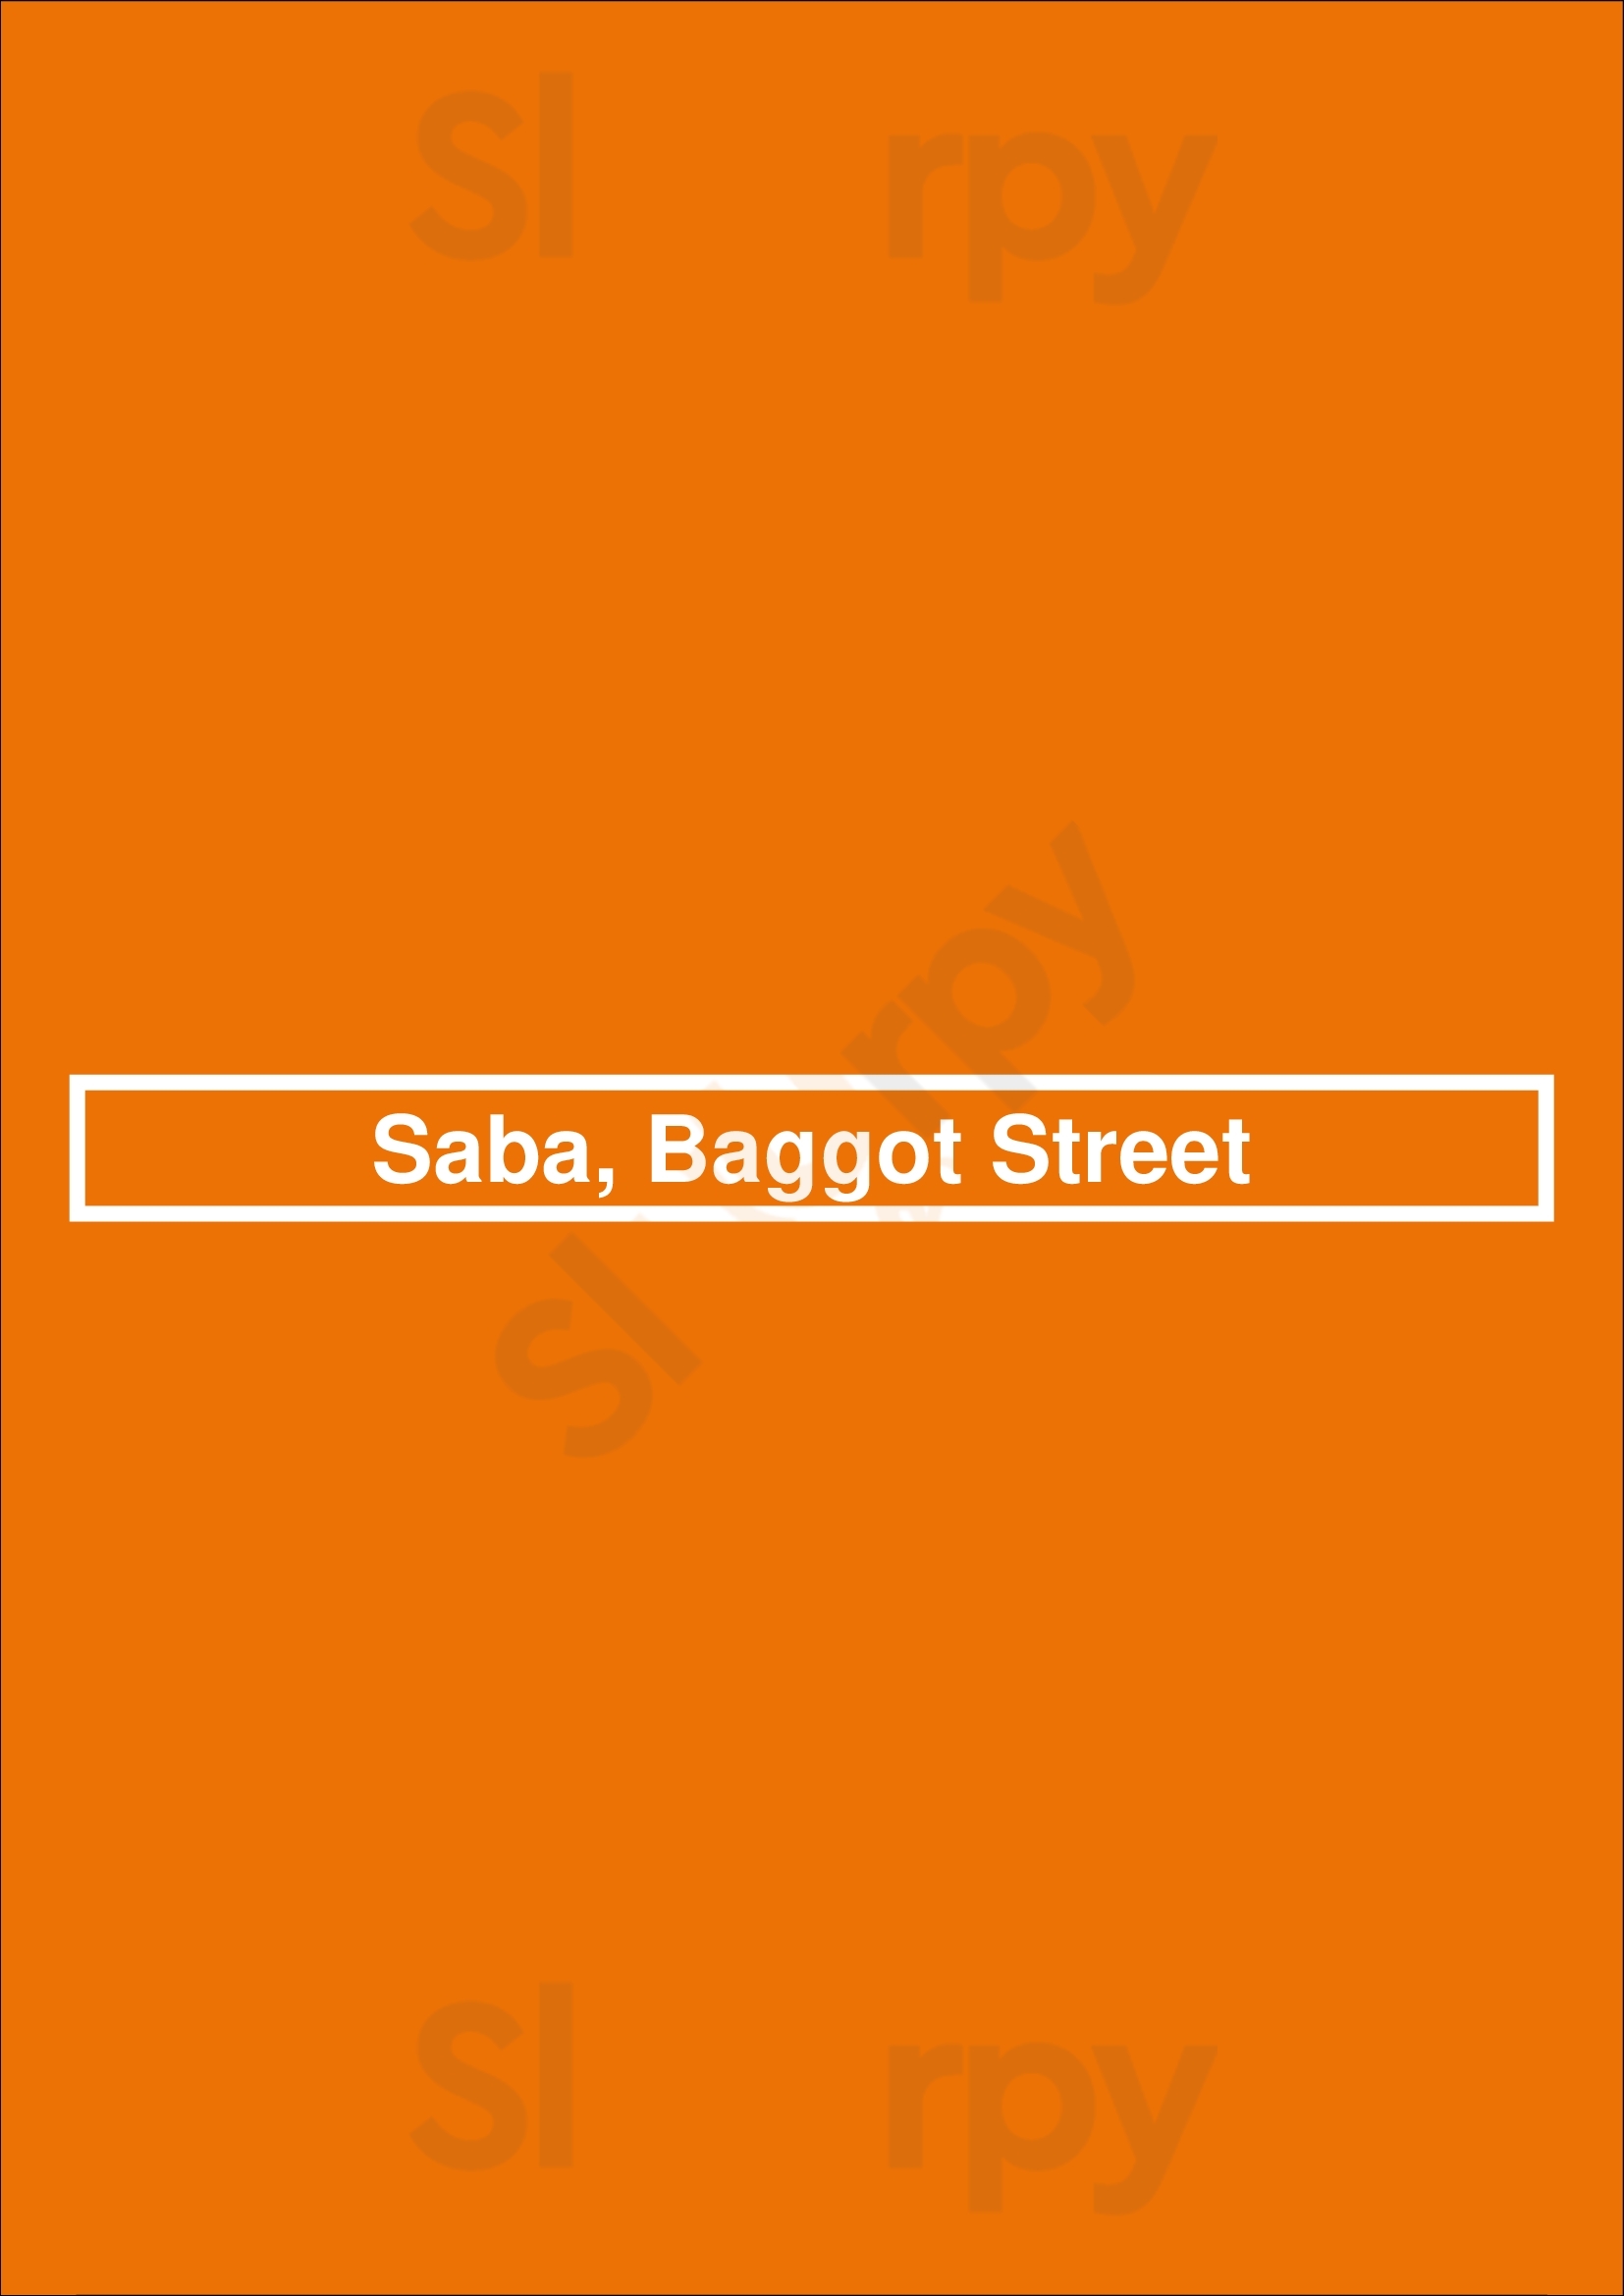 Saba, Baggot Street Dublin Menu - 1